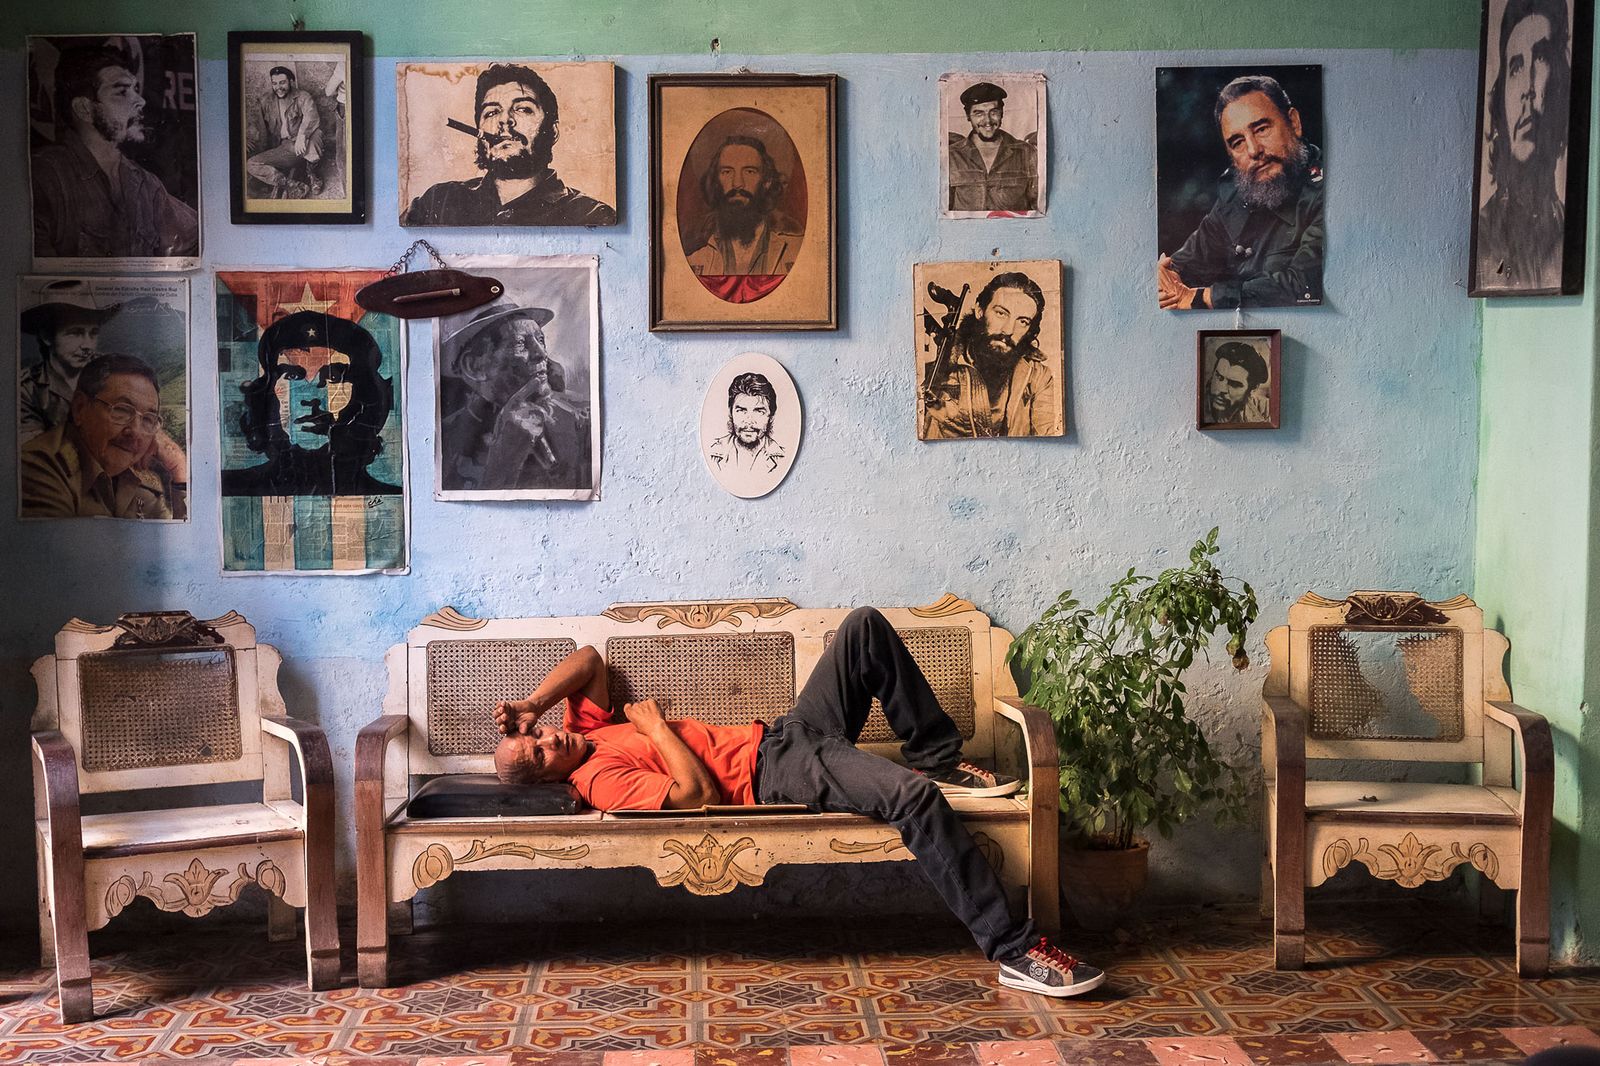 © Helga Salwe - I spent a couple of week's in Havana, Cuba documenting everyday and ordinary life.